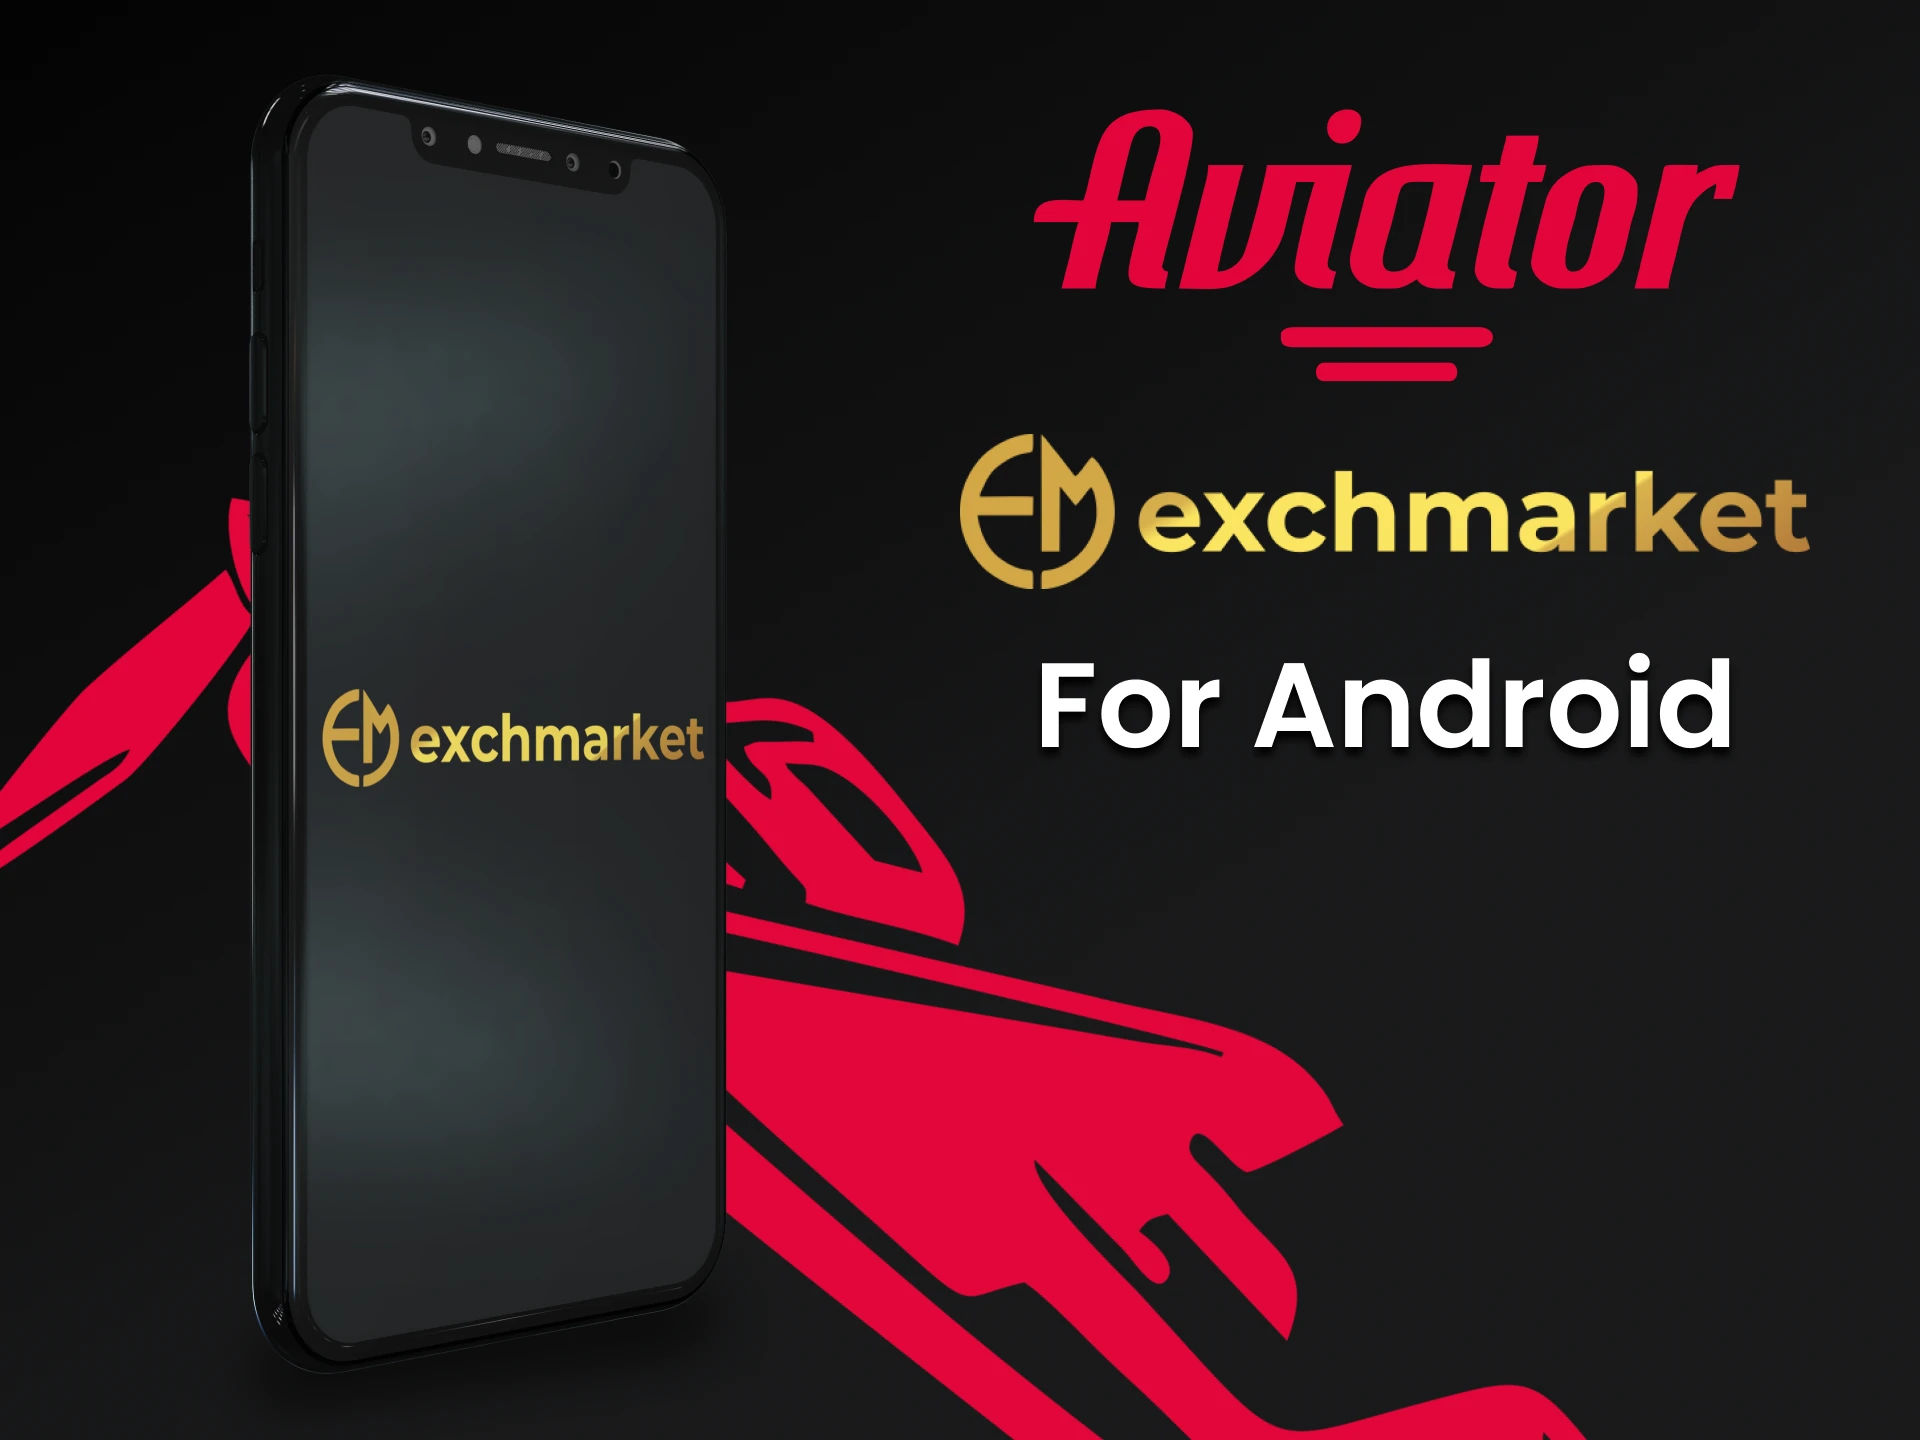 Instale o aplicativo do dispositivo Exchmarket Android para jogar o Aviator.